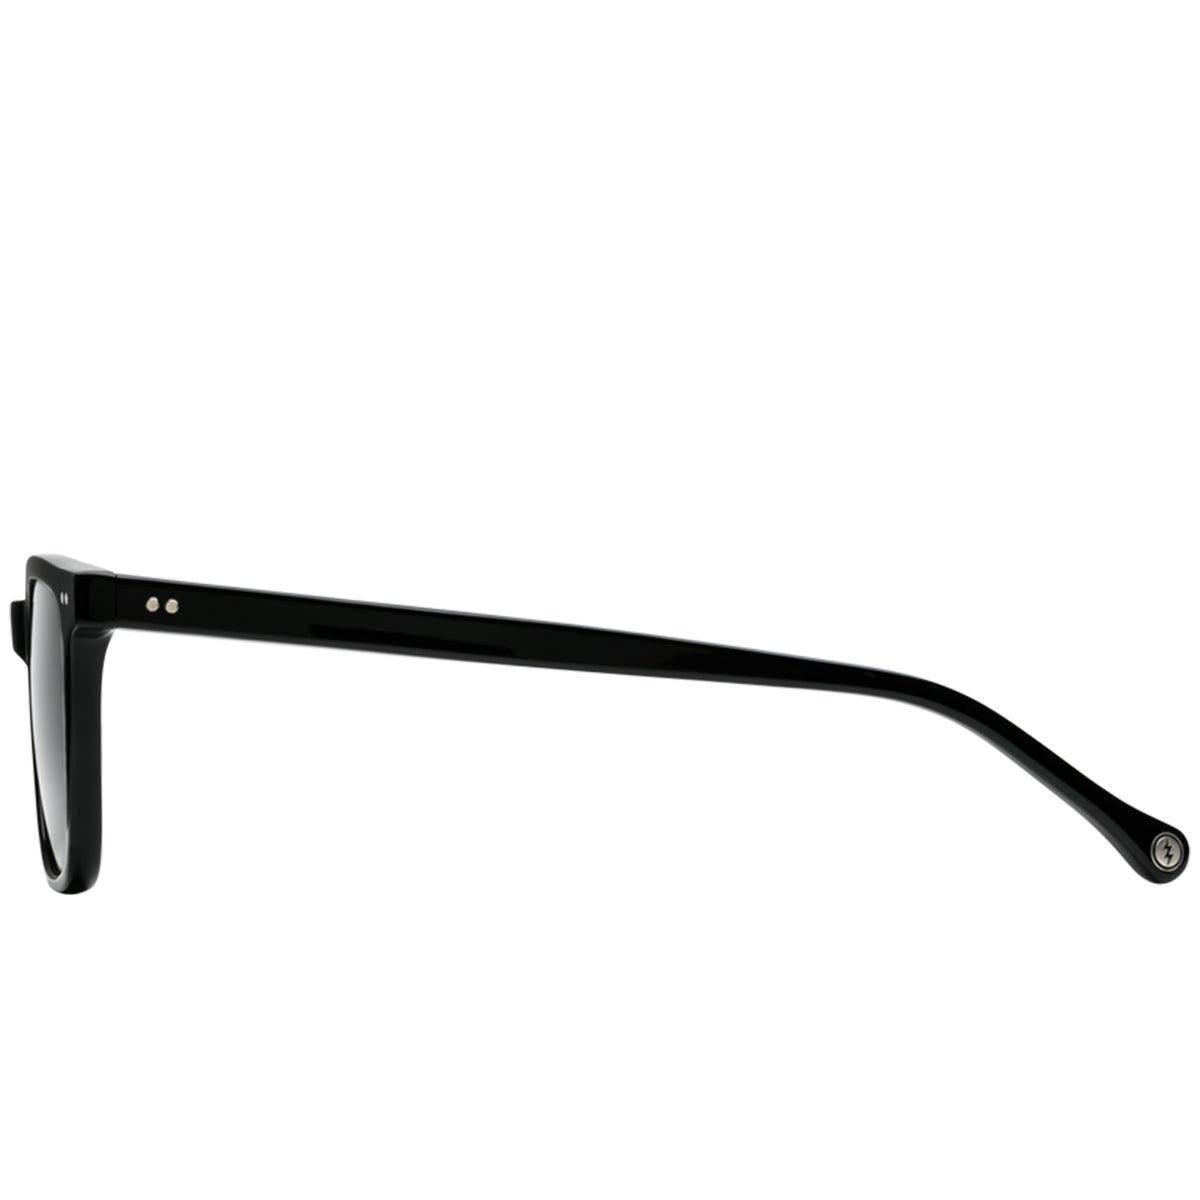 Electric JJF12 Polarized Pro Sunglasses